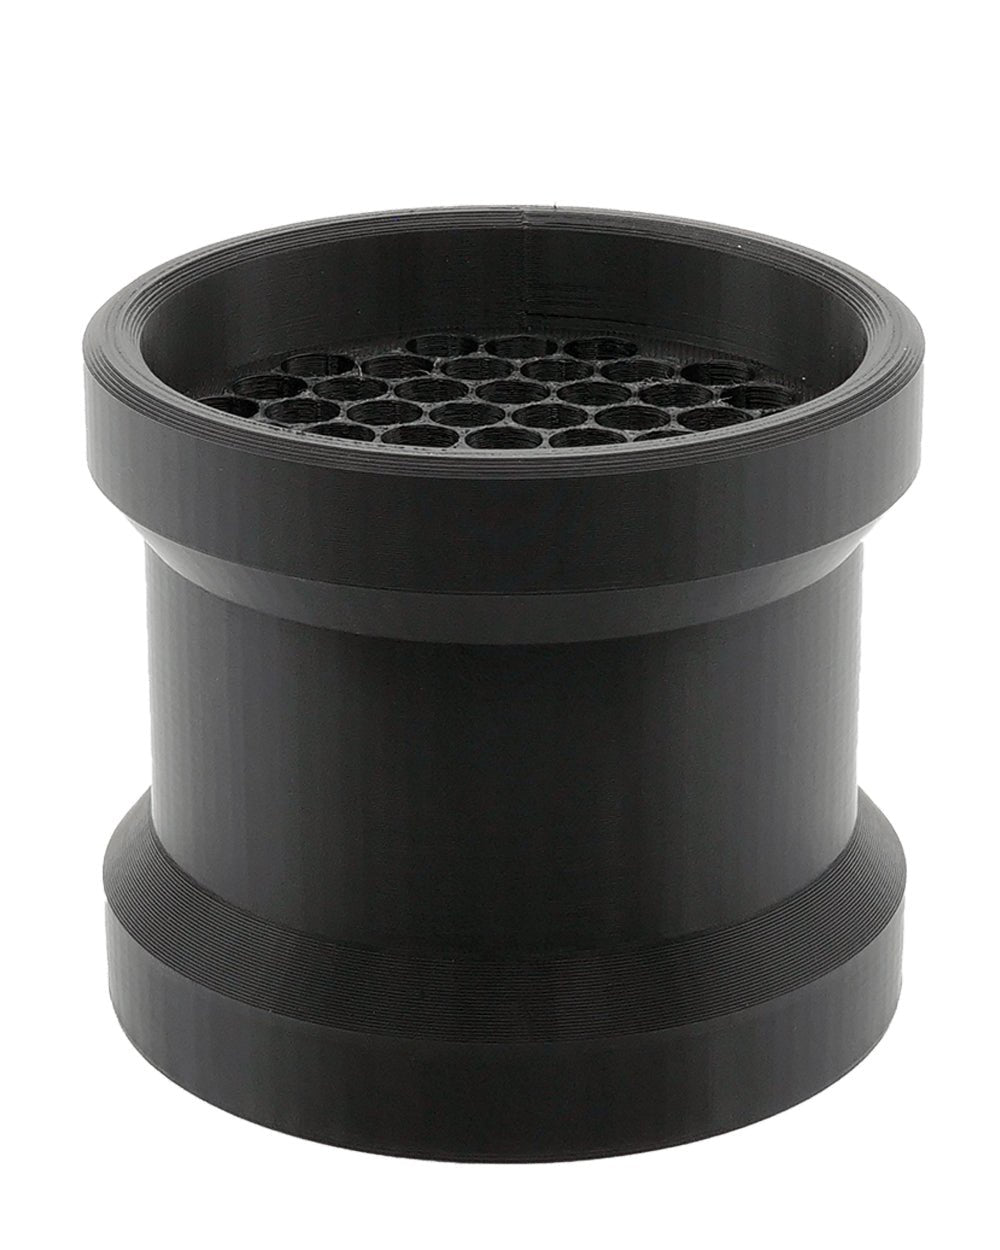 HUMBOLDT | Black Pre-Rolled Cones Filling Machine Cartridge 84mm | Fill 55 Cones Per Run - 1